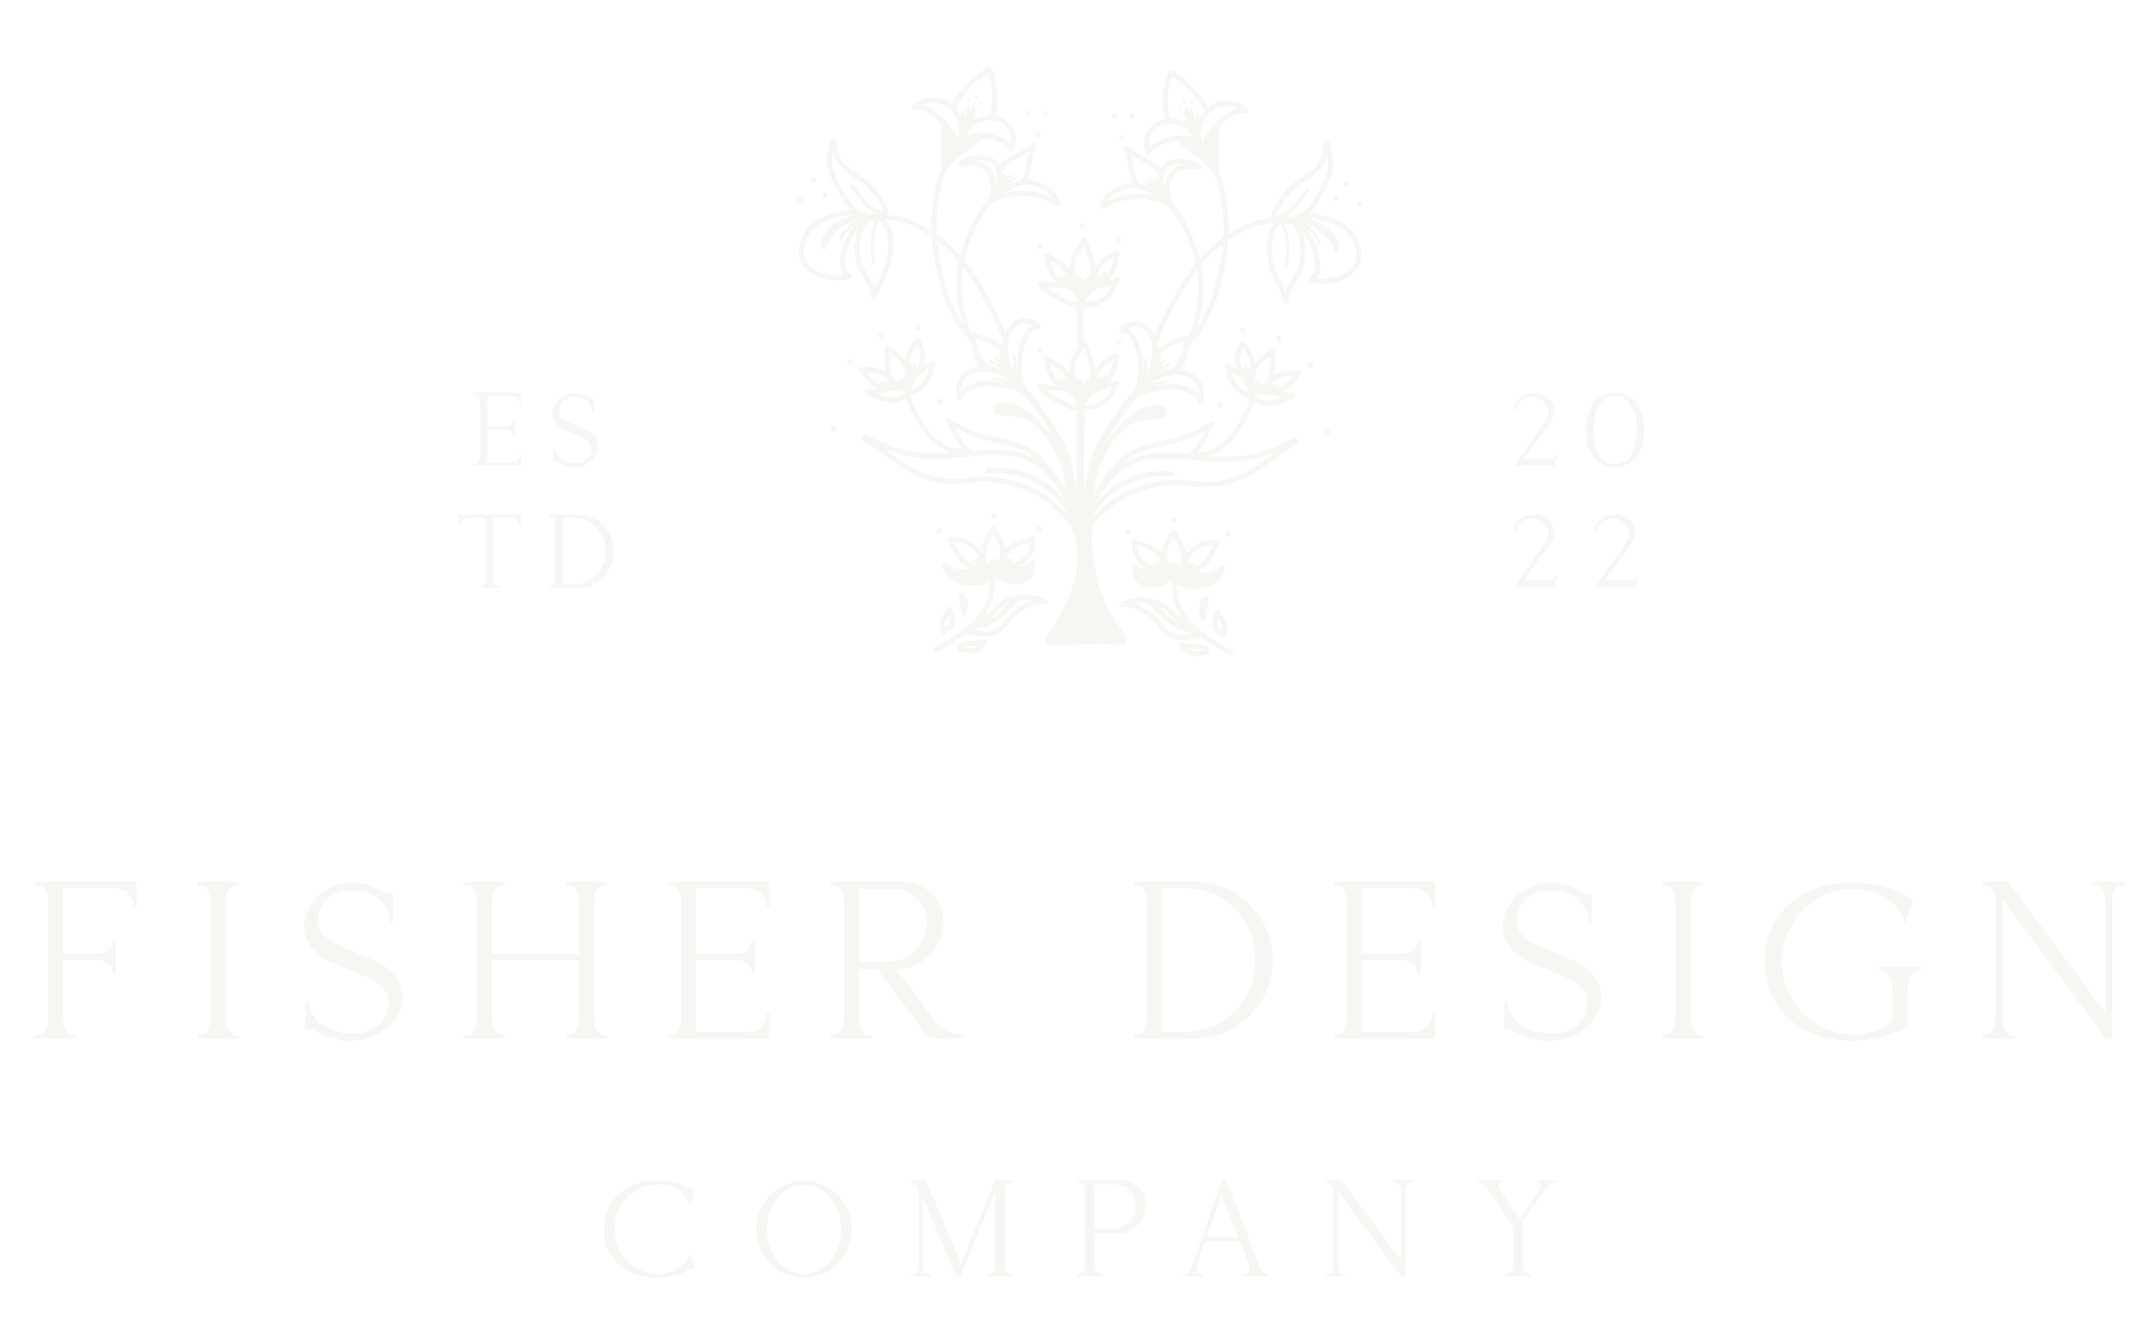 Fisher Design Company